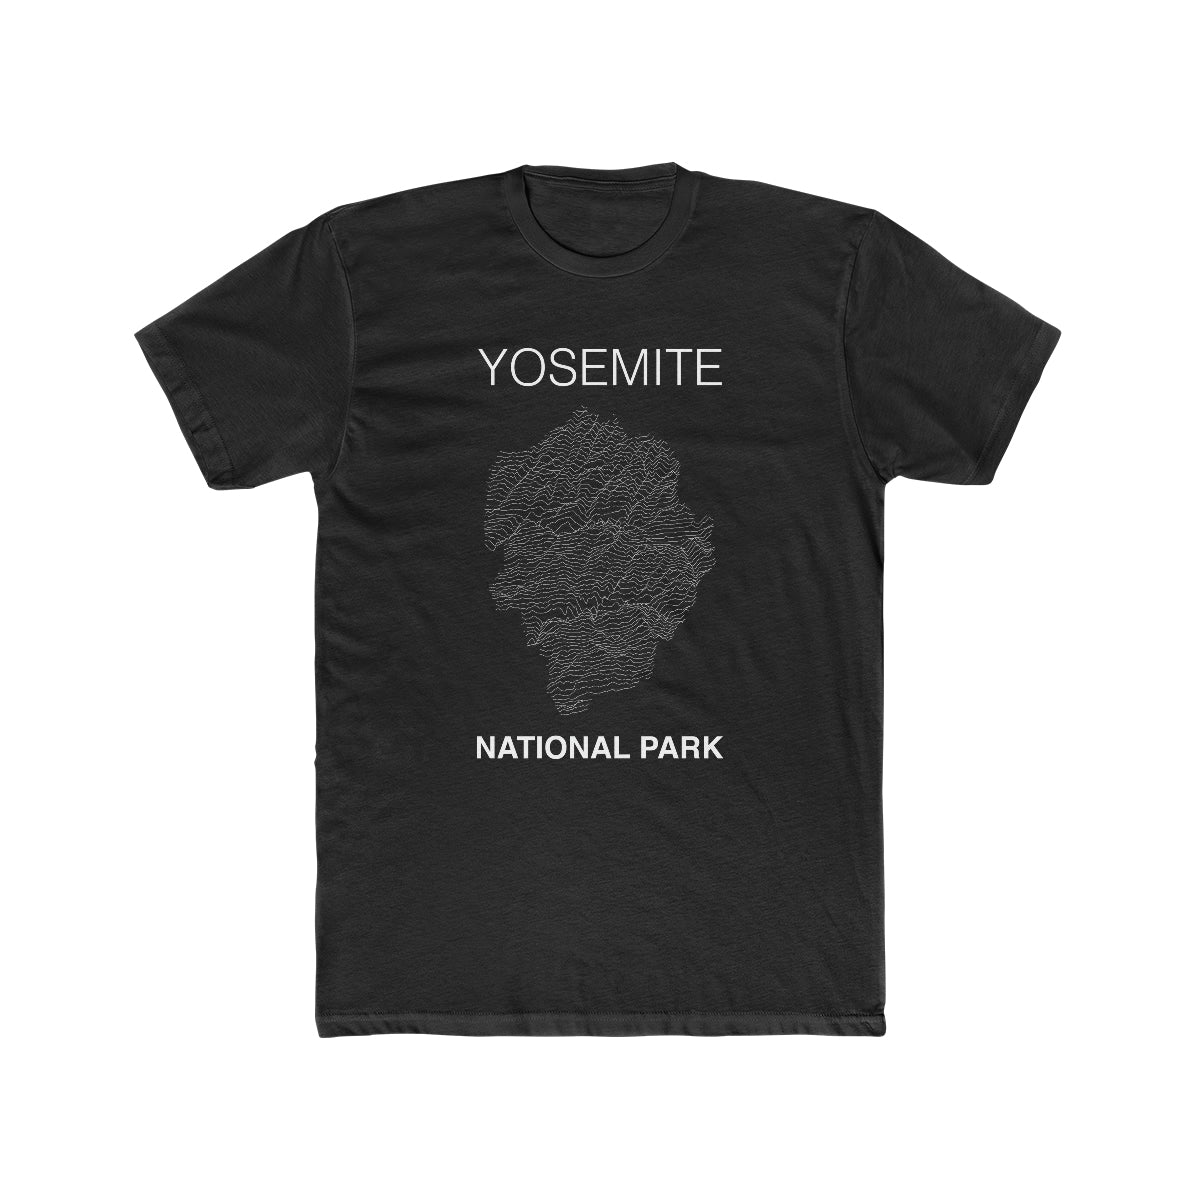 Yosemite National Park T-Shirt Lines